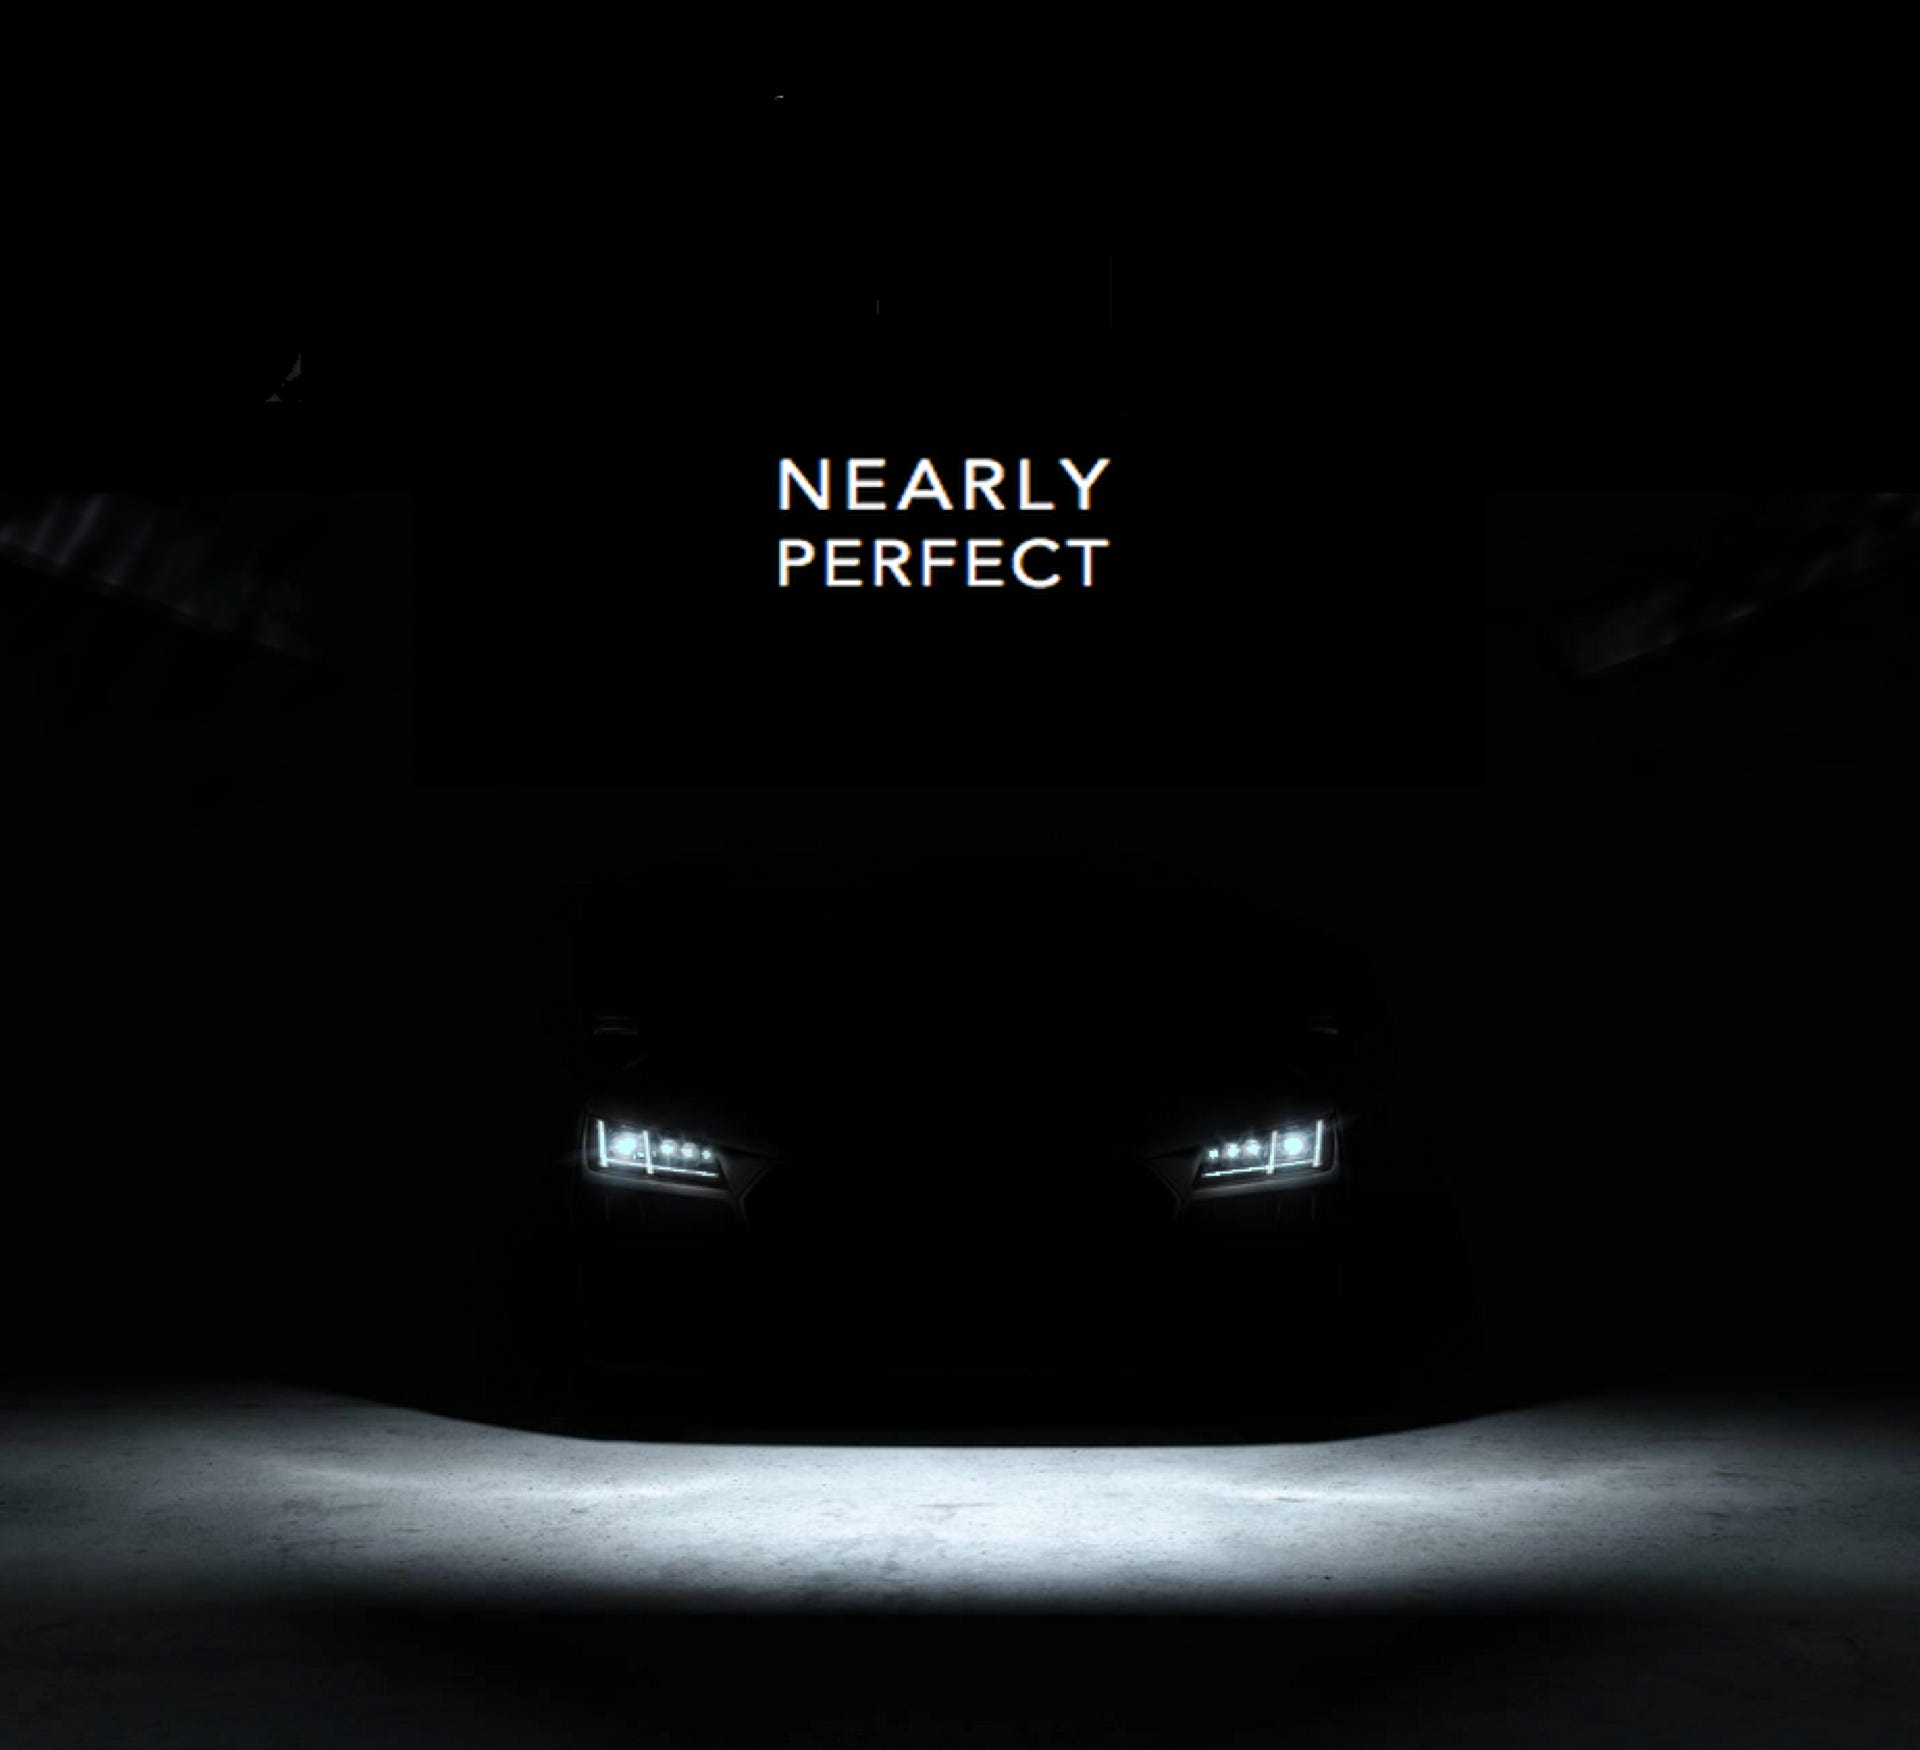 NP-NEARLY-PERFECT/NP/ARMIN-RUSCHEINSKY/NEARLY-PERFECT/ nearly-perfect.com nightvision lifestyle